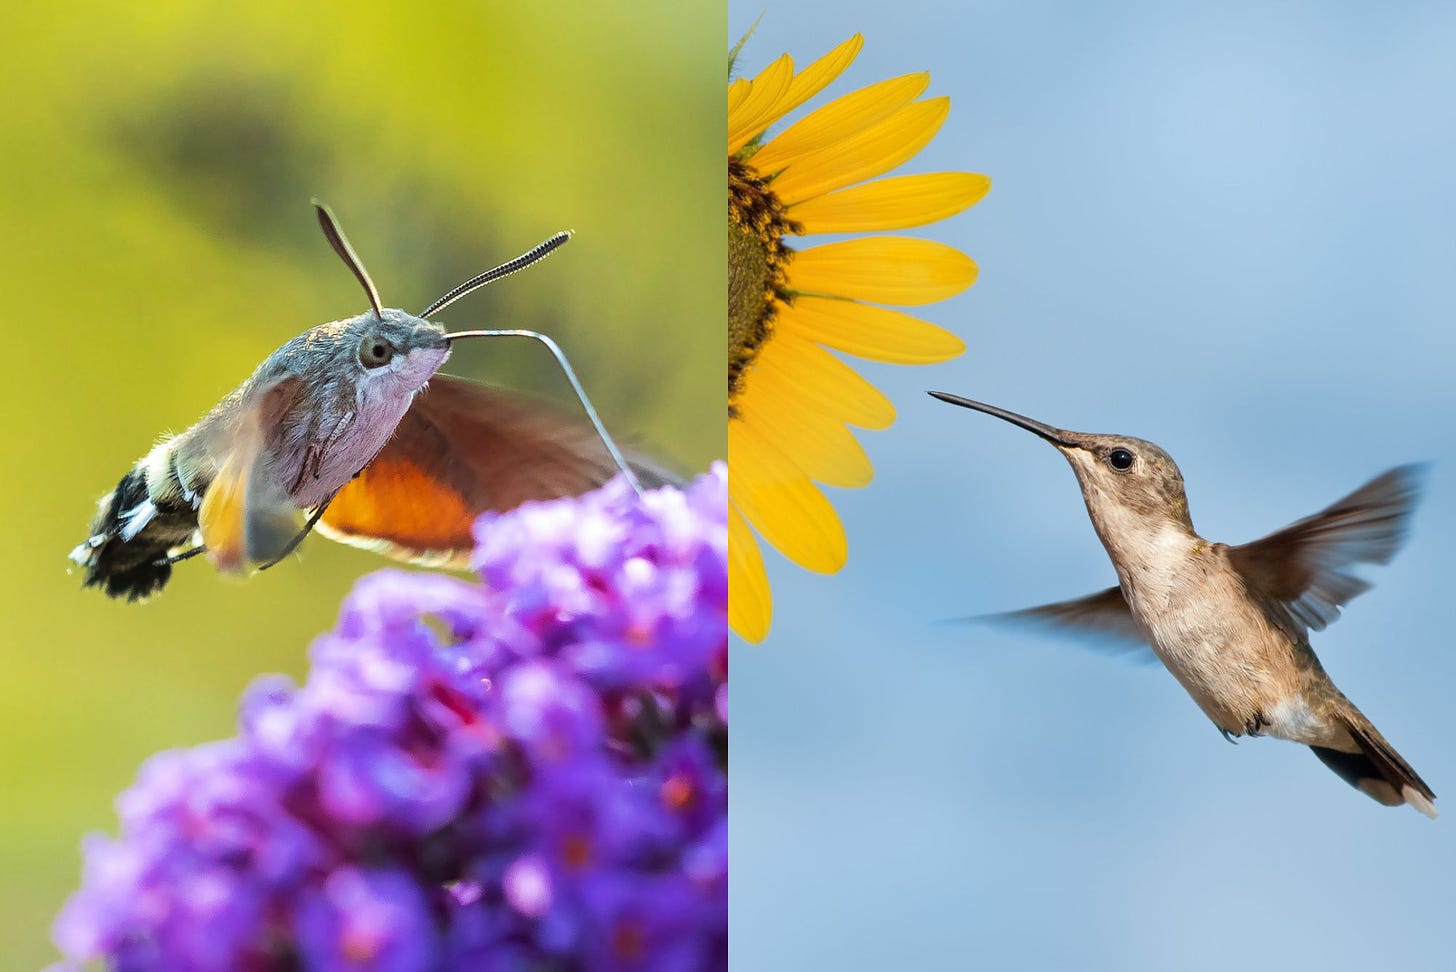 Hummingbird Moth vs Hummingbird: Don't Let Your Eyes Deceive You